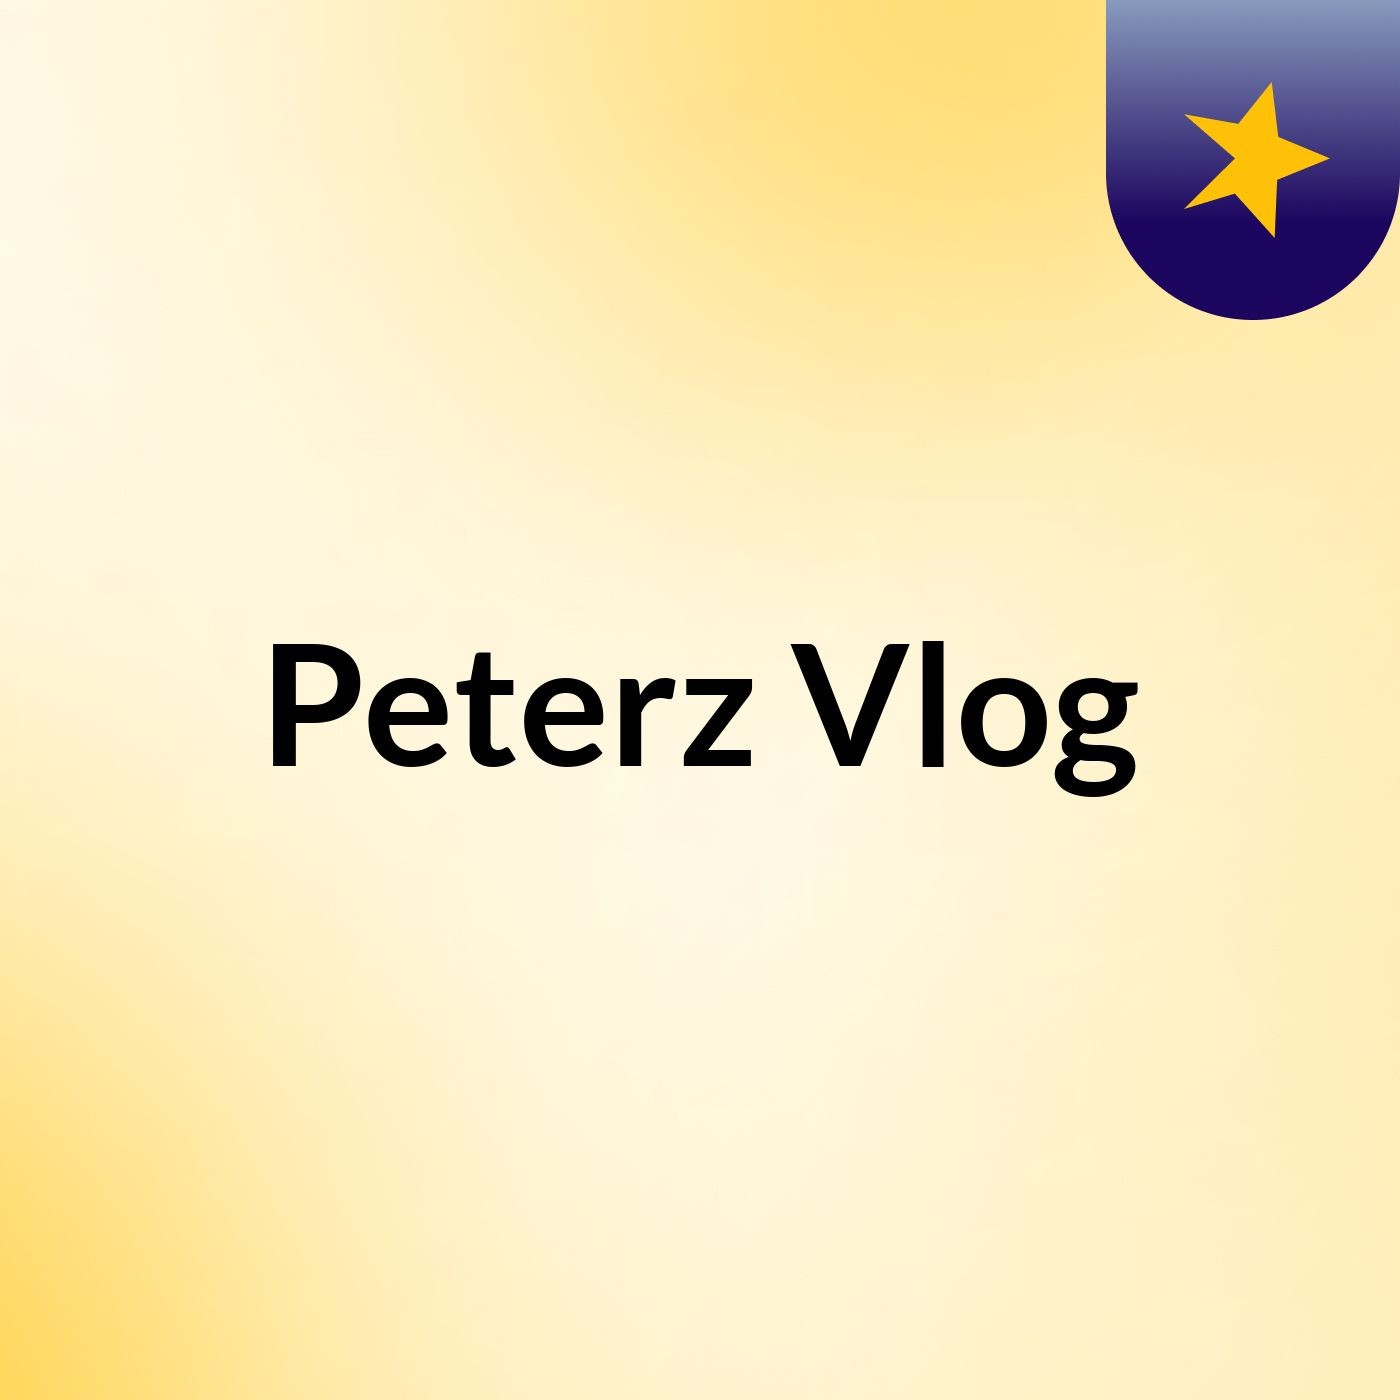 Episode 4 - Peterz Vlog